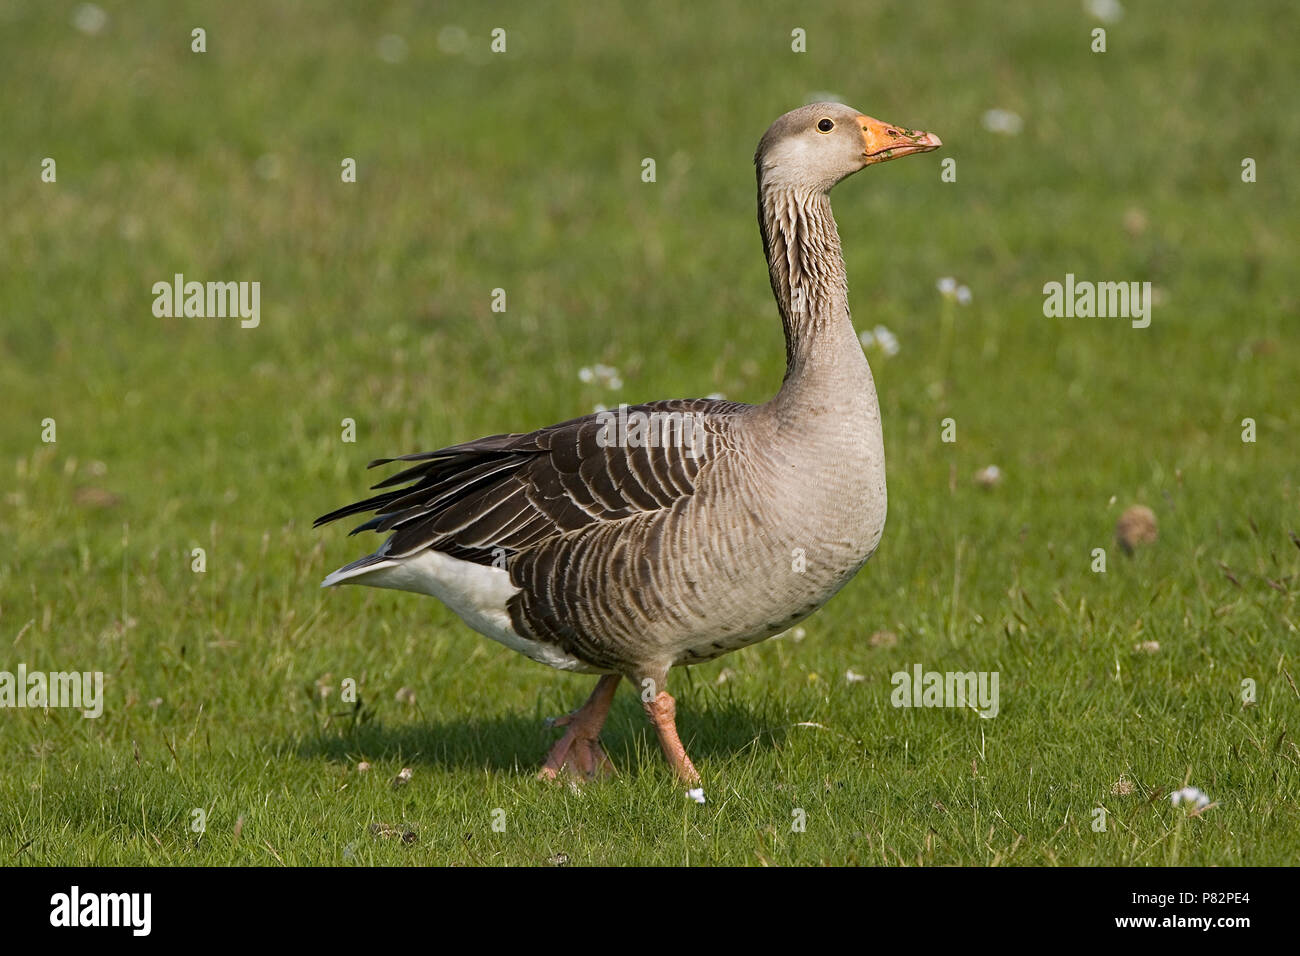 Greylag Goose standing on grass; Grauwe Gans staand op gras Stock Photo